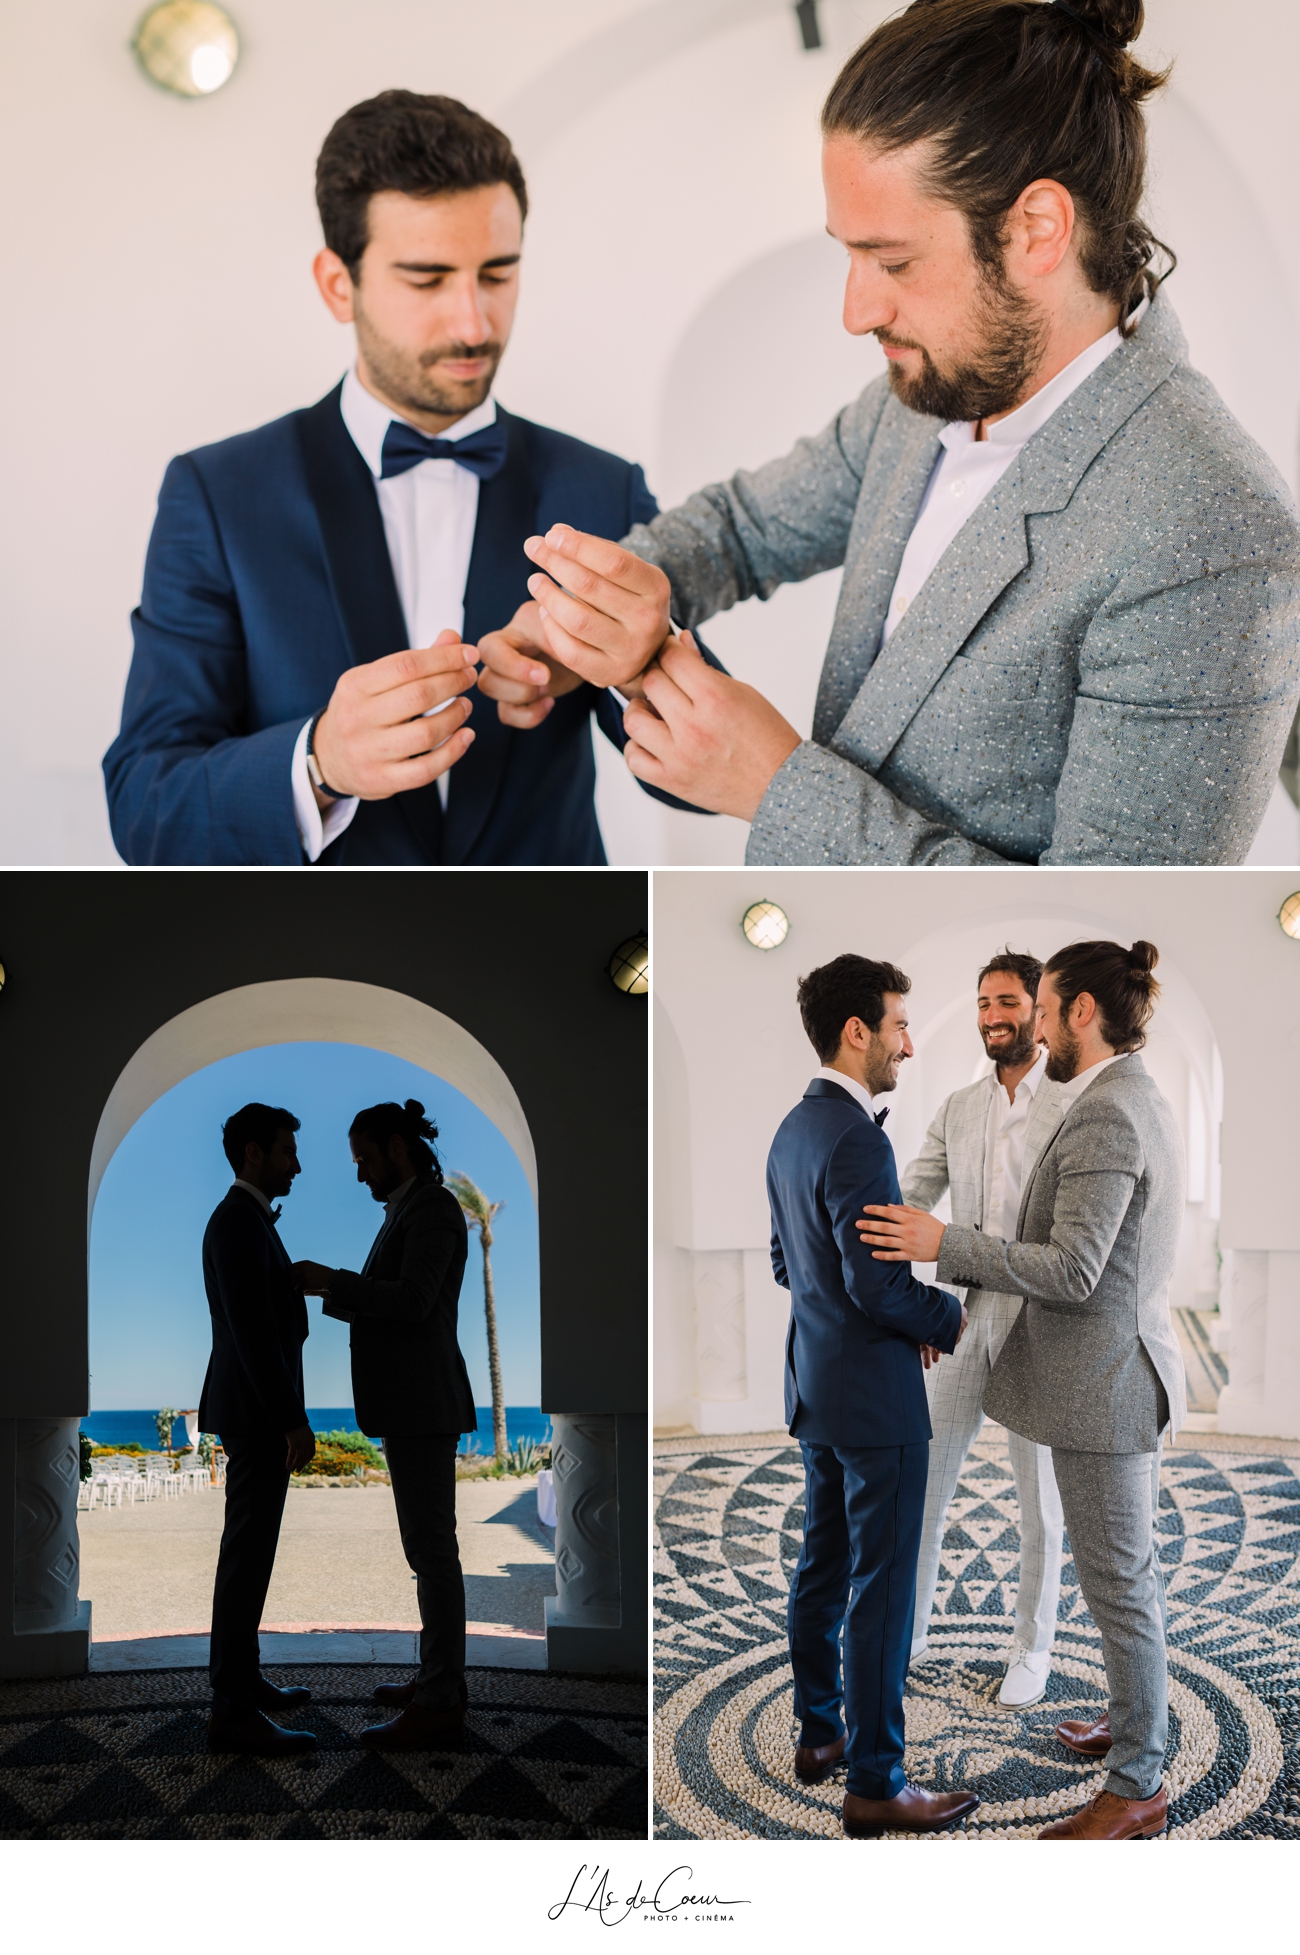 Photographe mariage grece - wedding photographer greece préparatifs marié témoins